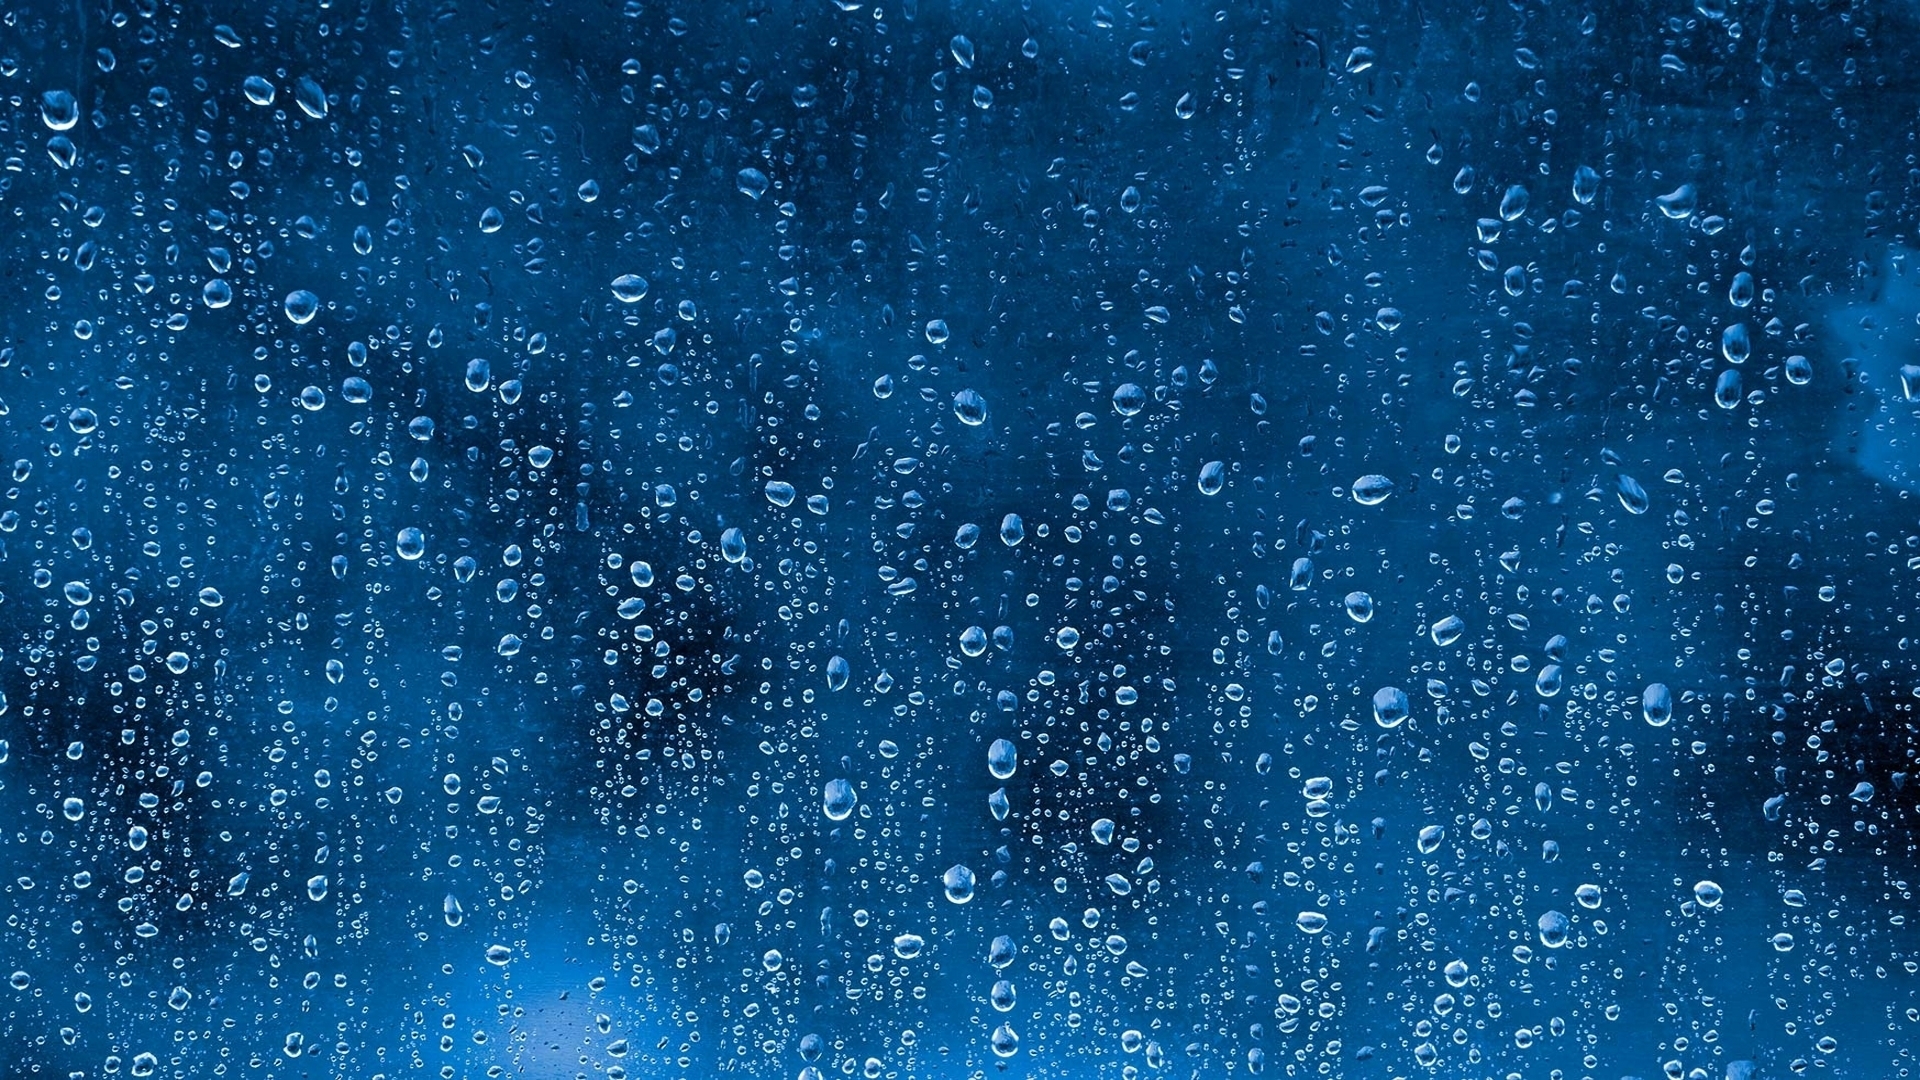 storms rain window glass reflection abstract bokeh wallpaper